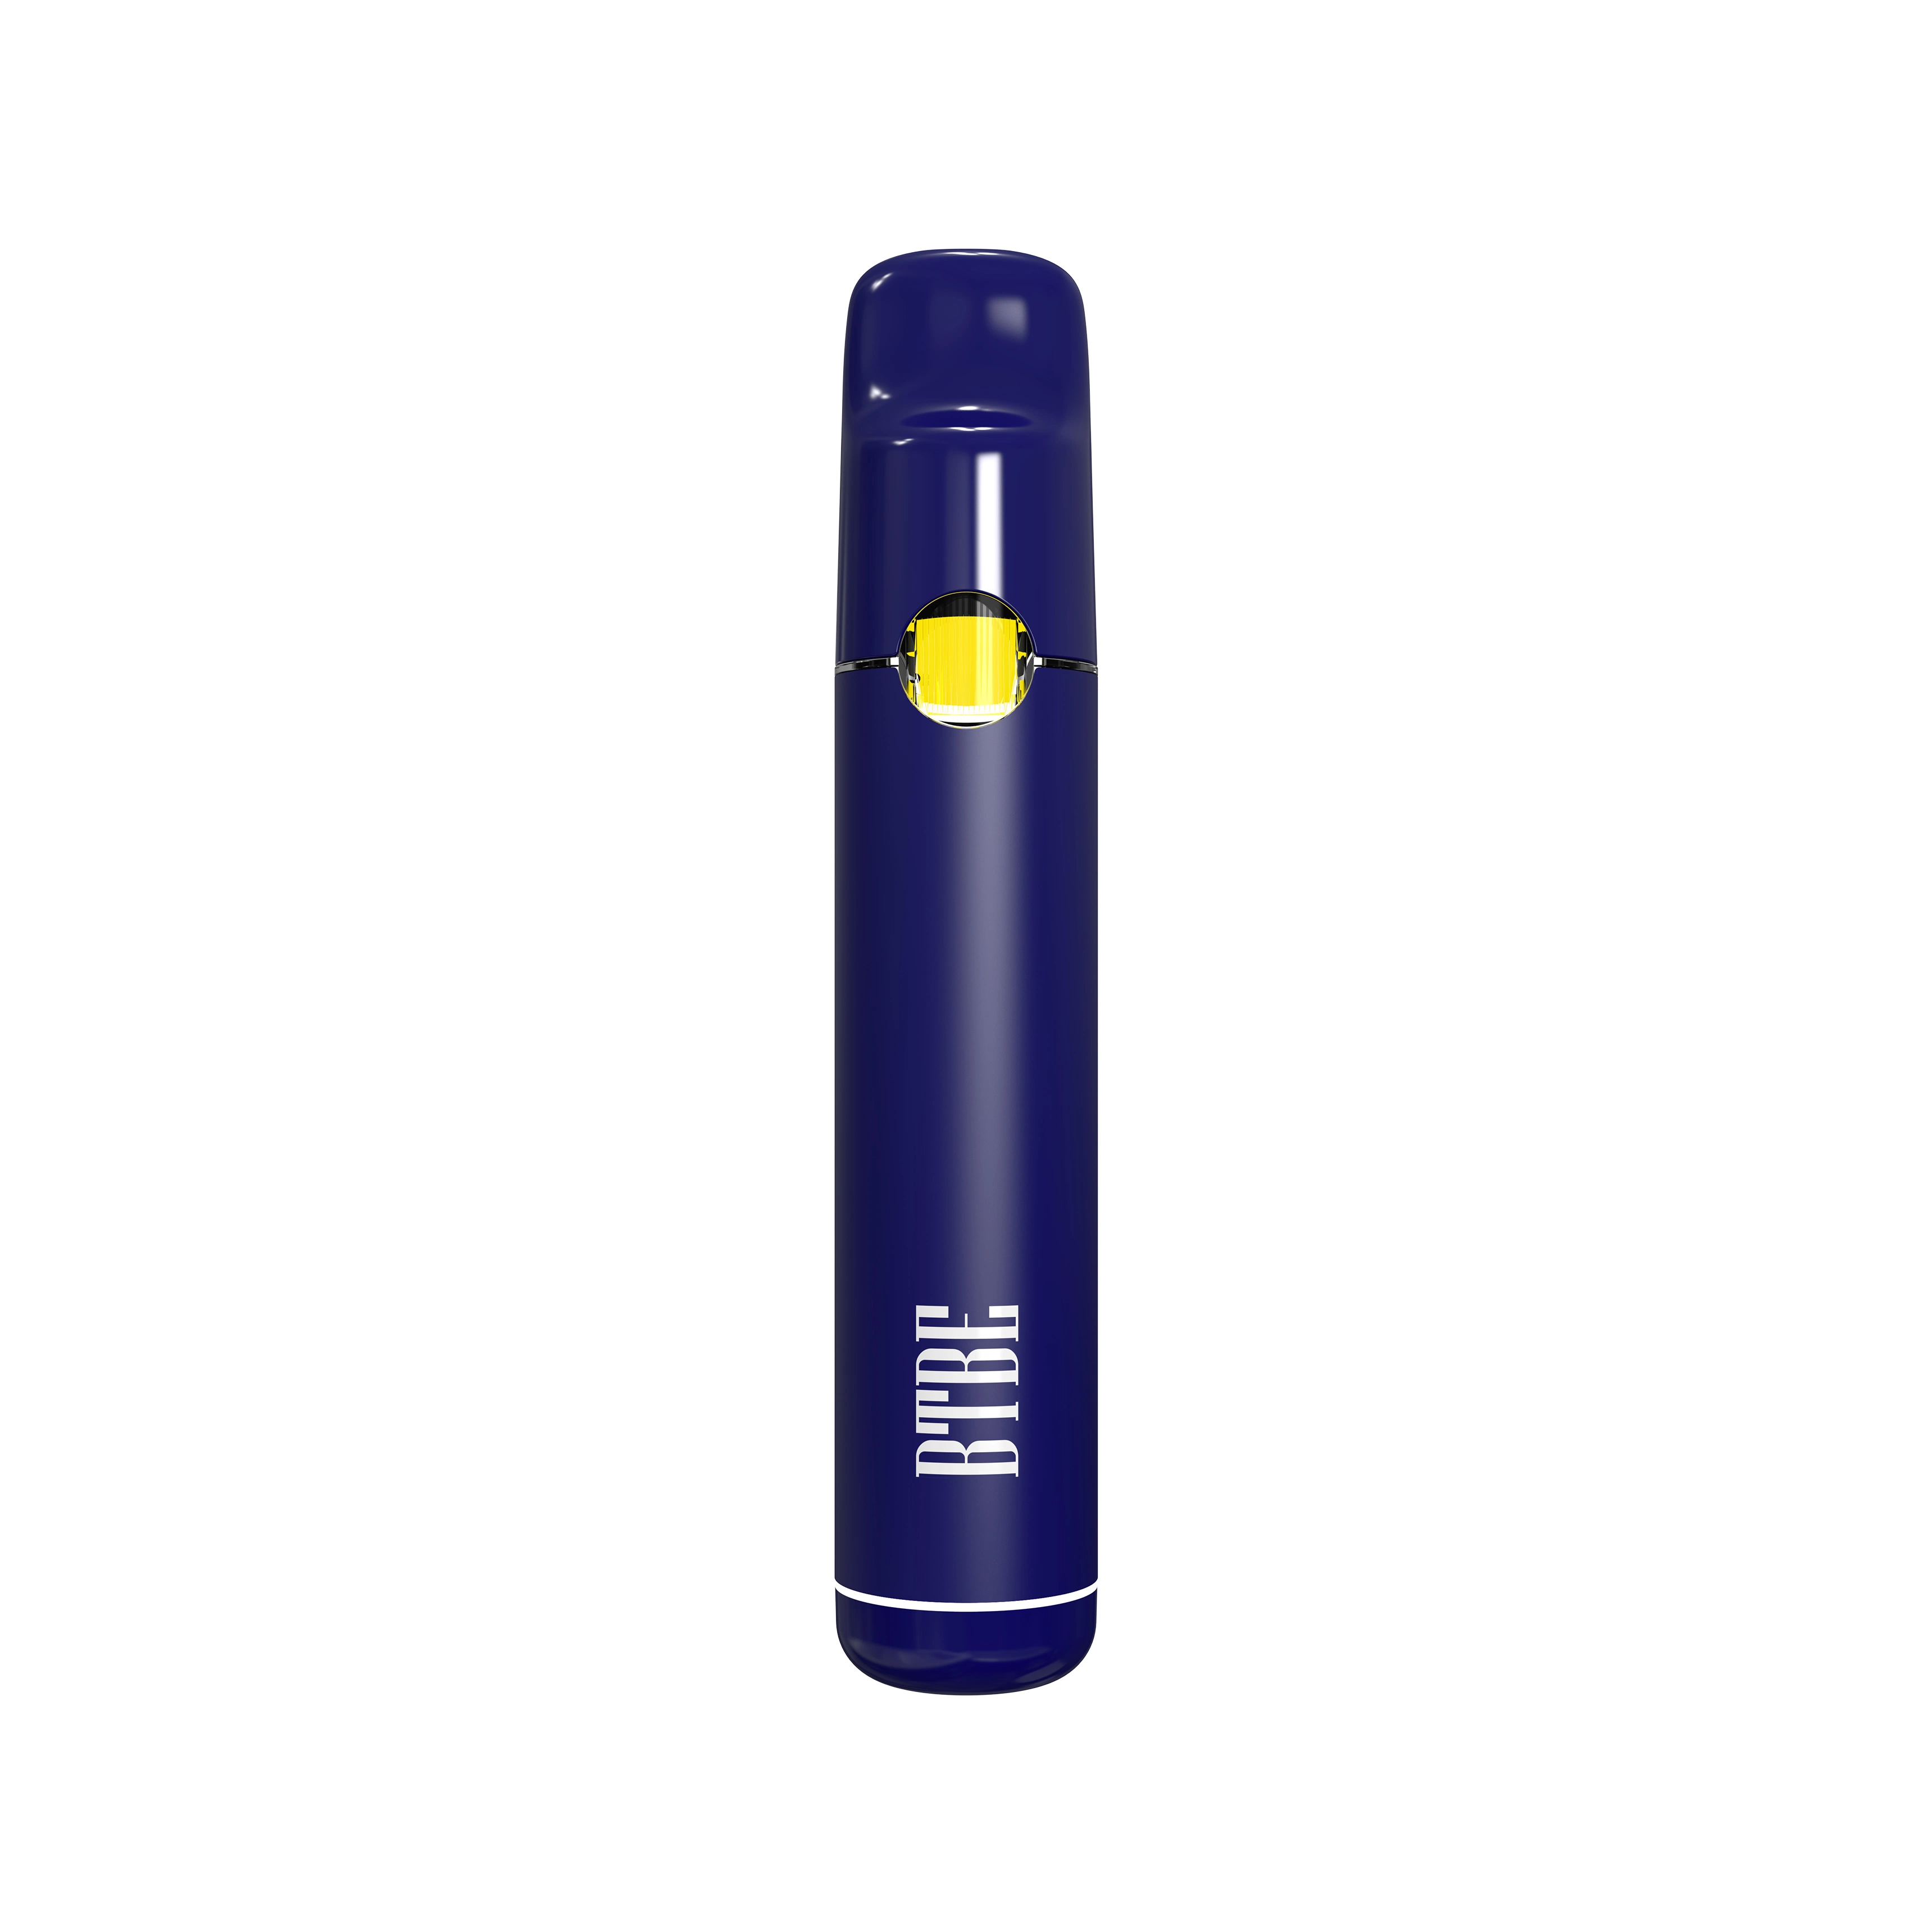 NextVAPOR Low Temp 1,0 мл Health Electronic Cigarette Vaporizer Pen